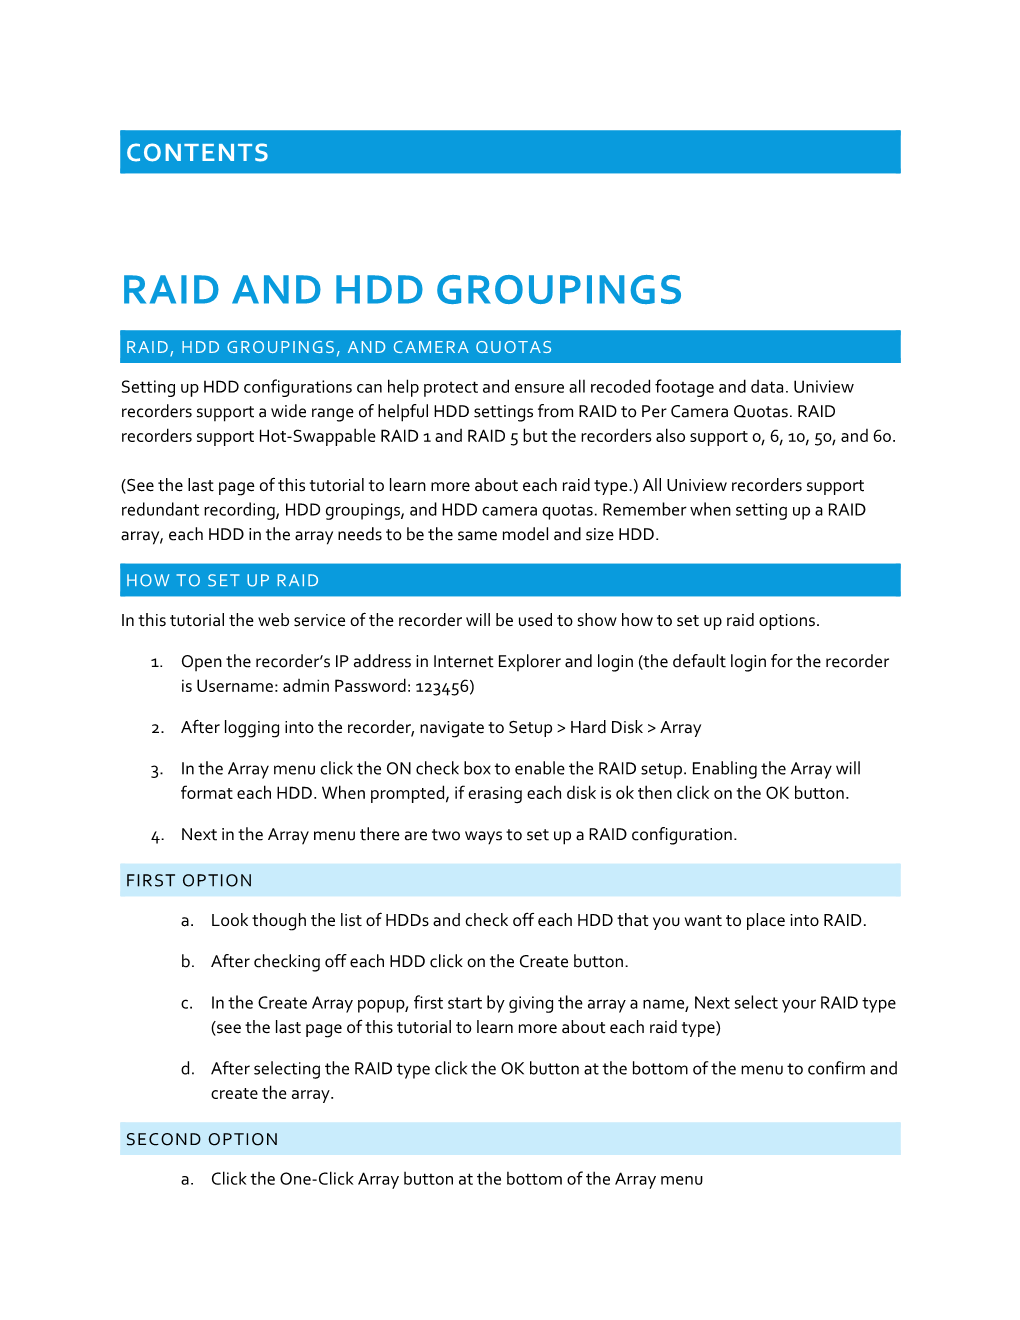 Raid, HDD Groupings, and Camera Quotas